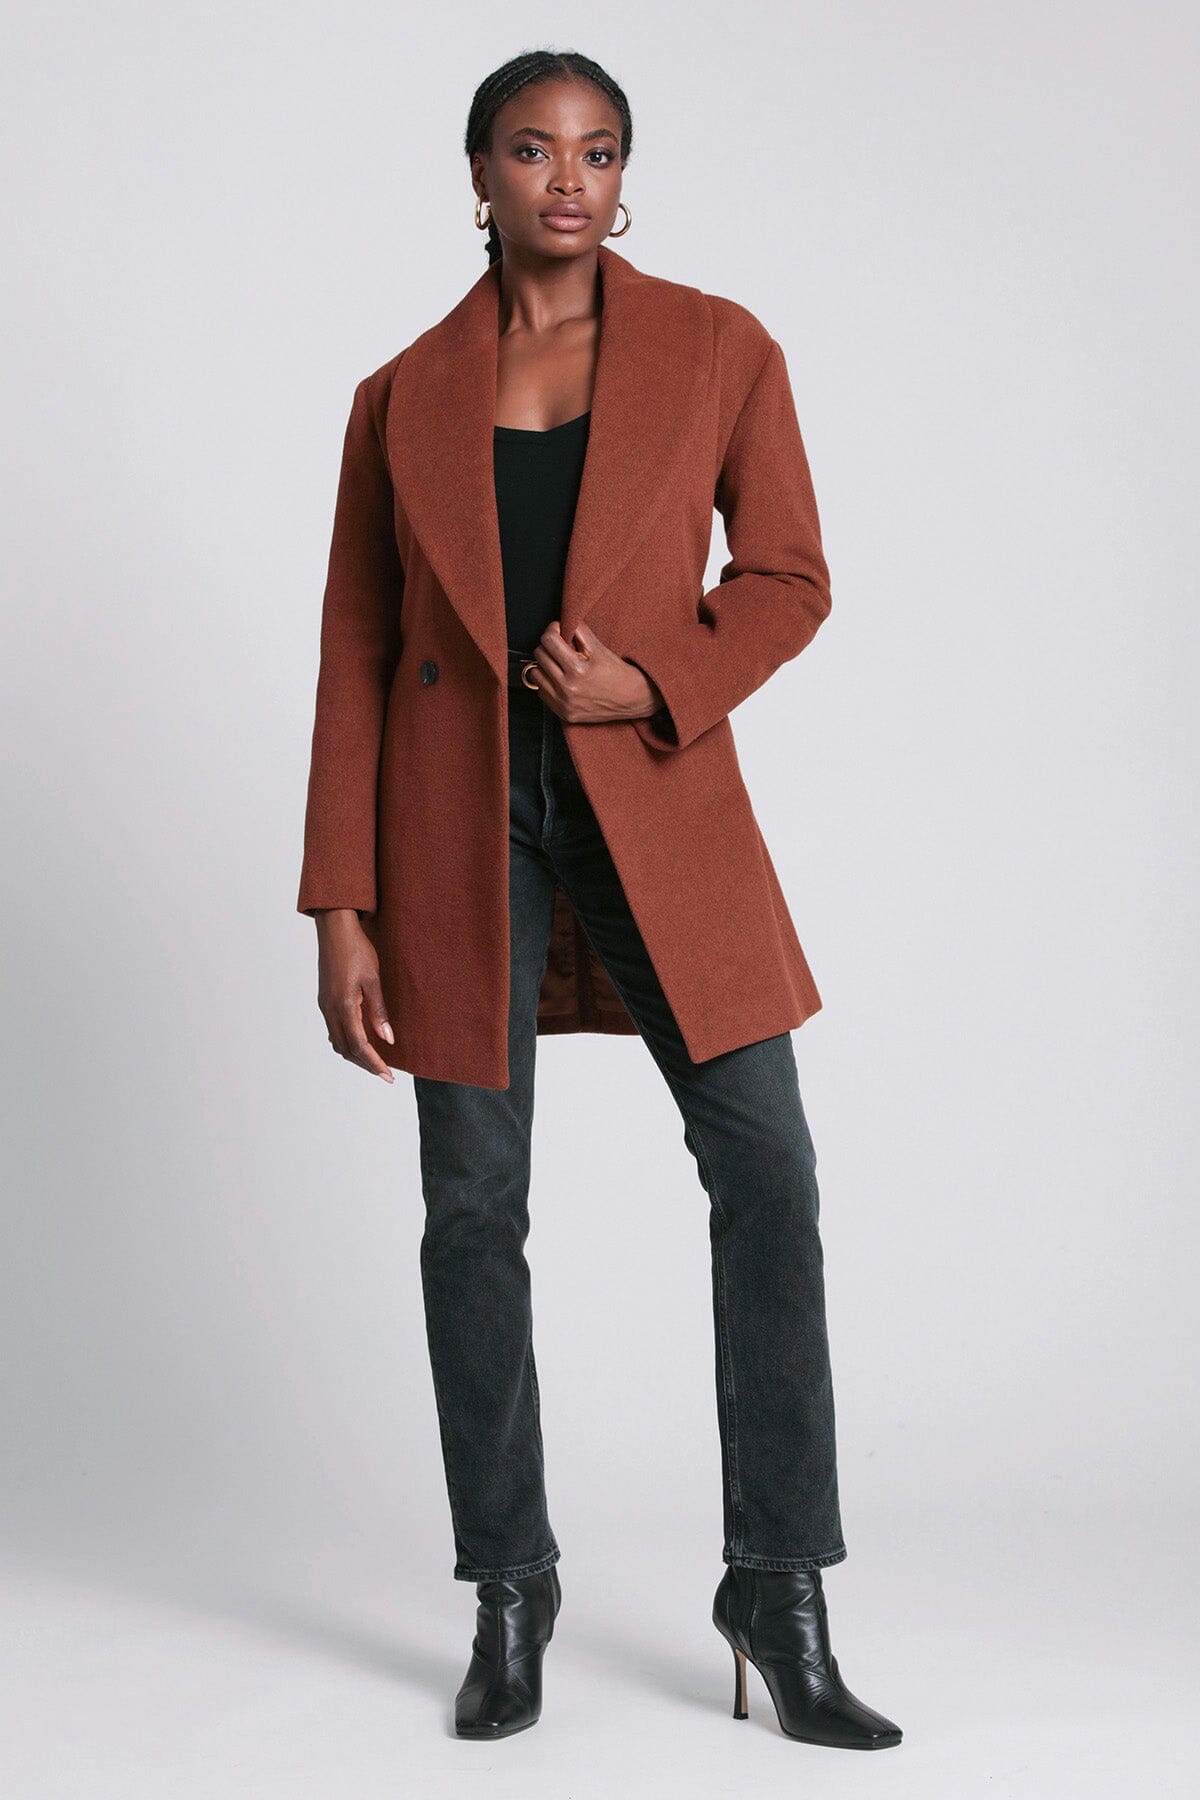 Cinnamon brown wool blend belted shawl collar peacoat coat - women's figure flattering work appropriate outerwear